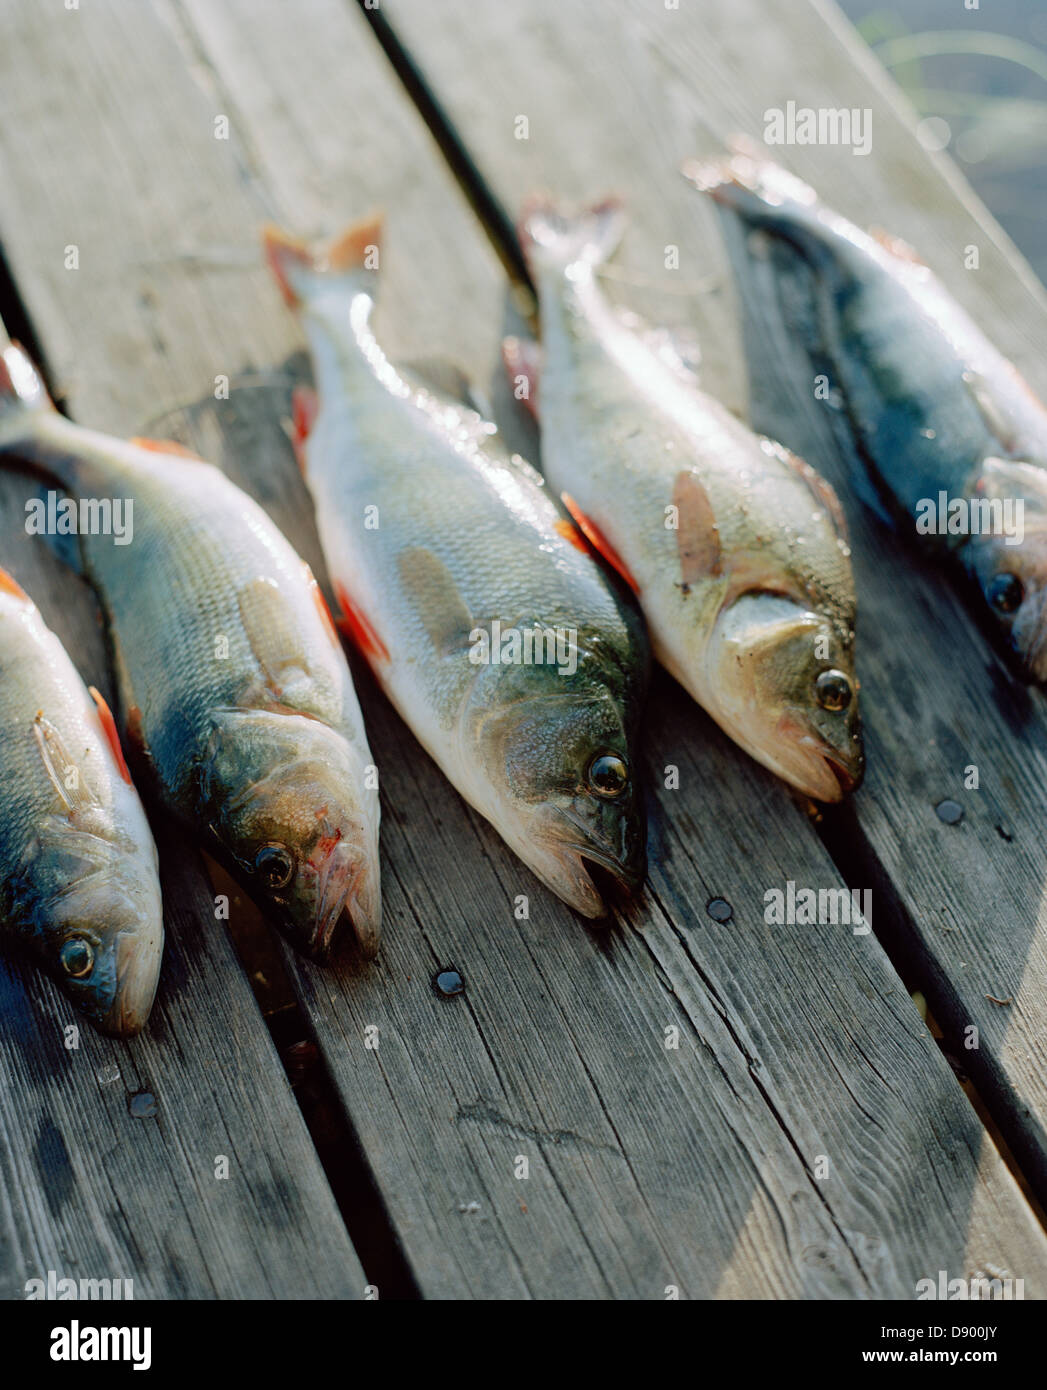 Five freshly caught perch. Stock Photo